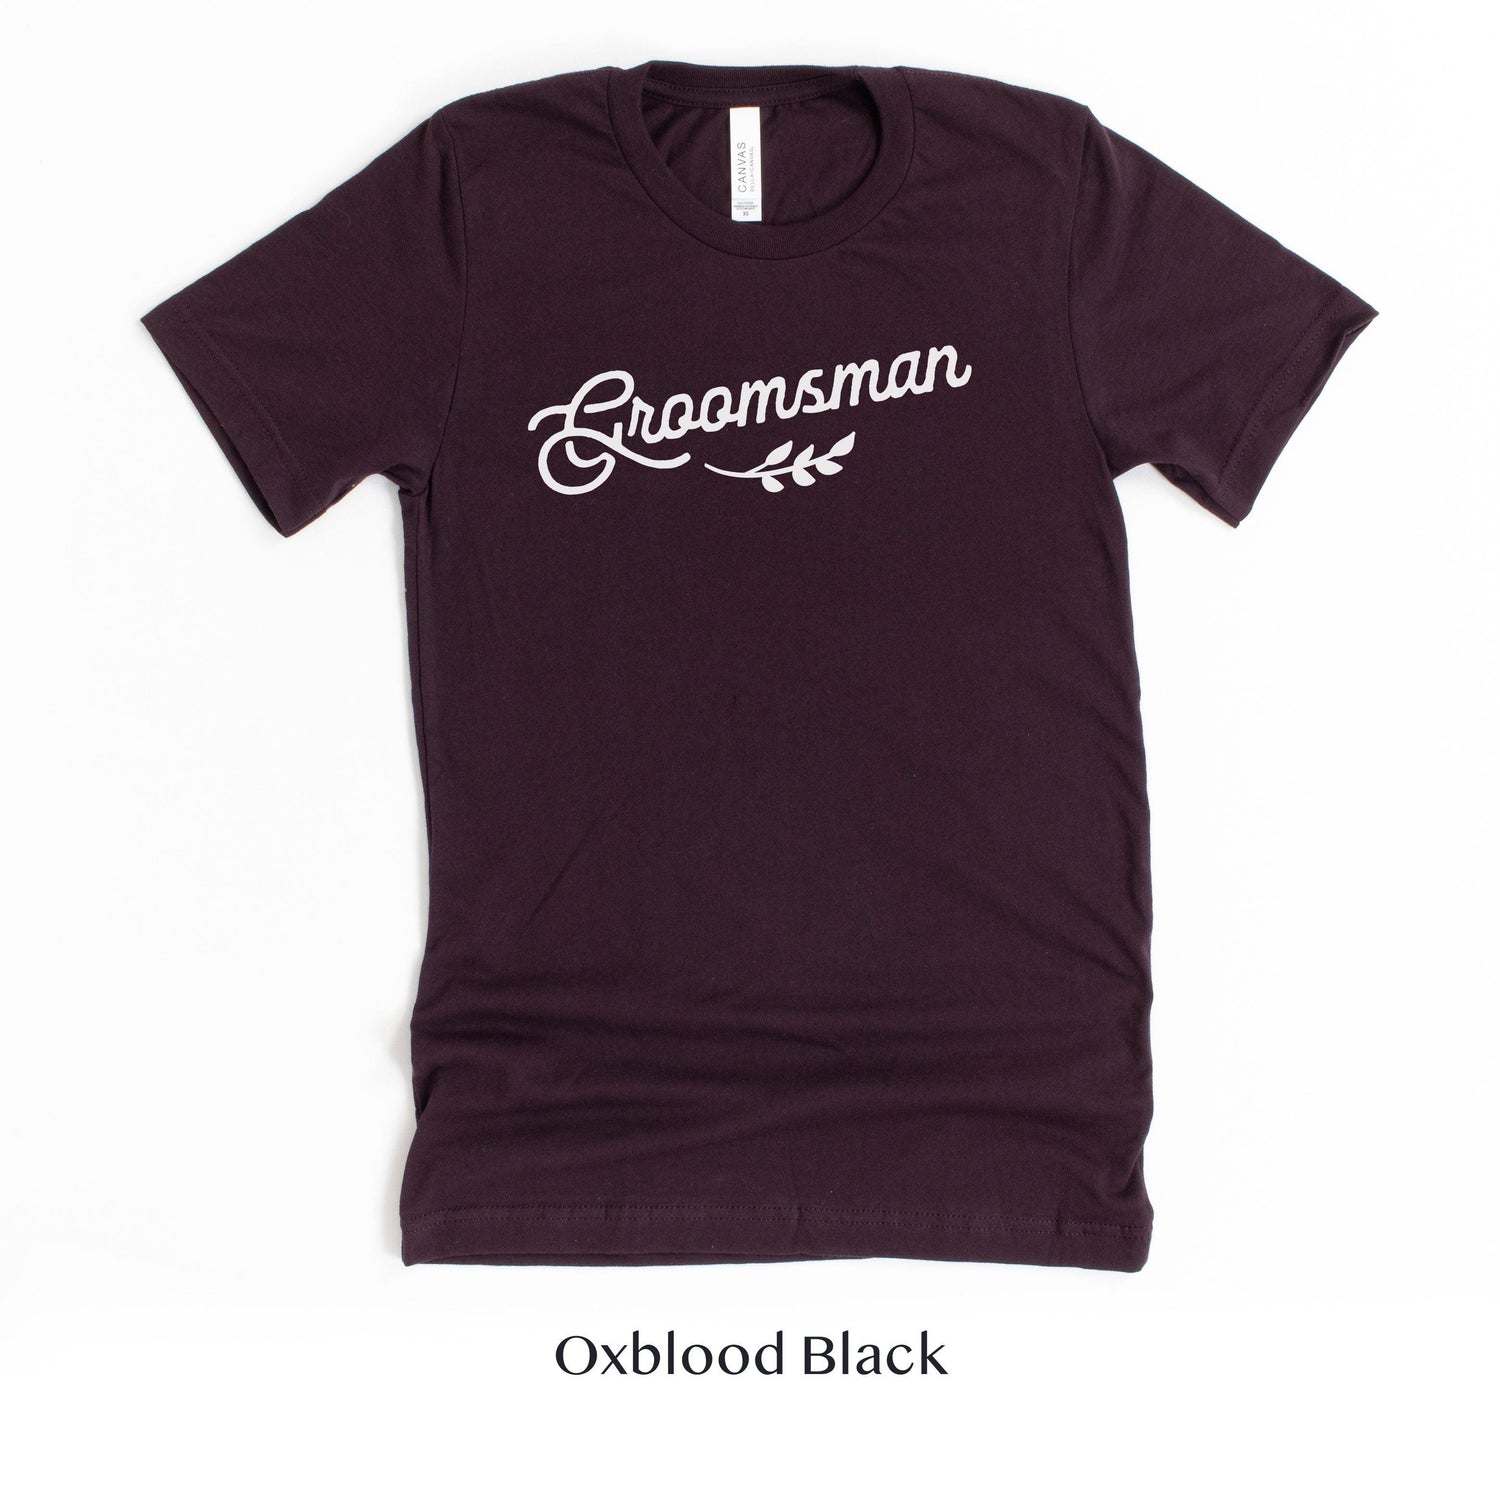 Groomsman Wedding Party Short-Sleeve Tee - Sizes XS-5XL by Oaklynn Lane